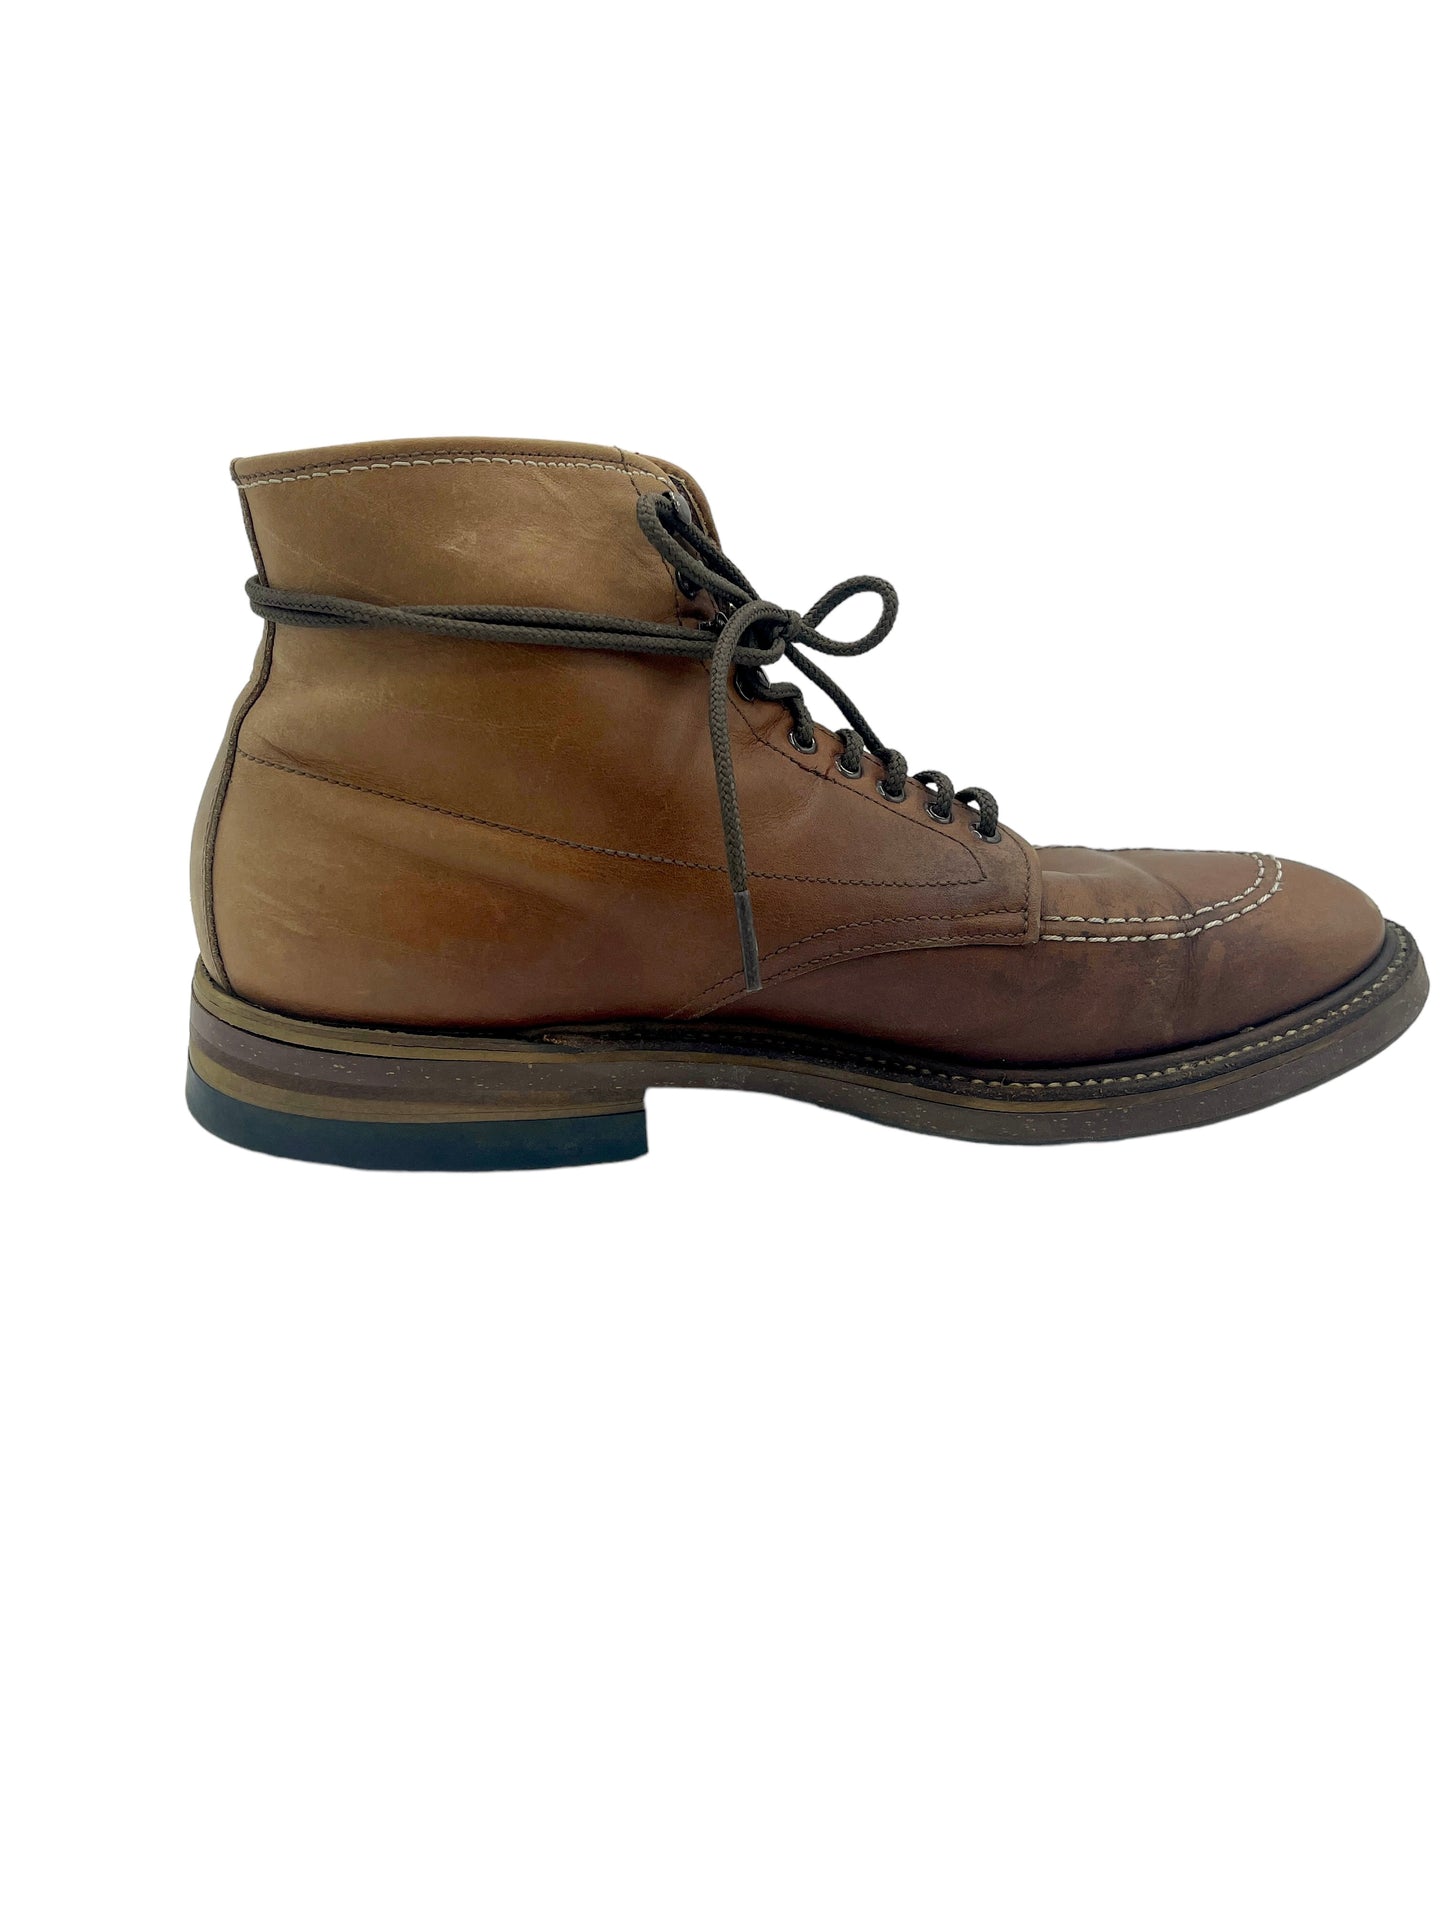 Alden Light Brown Calfskin Leather Indy Boots